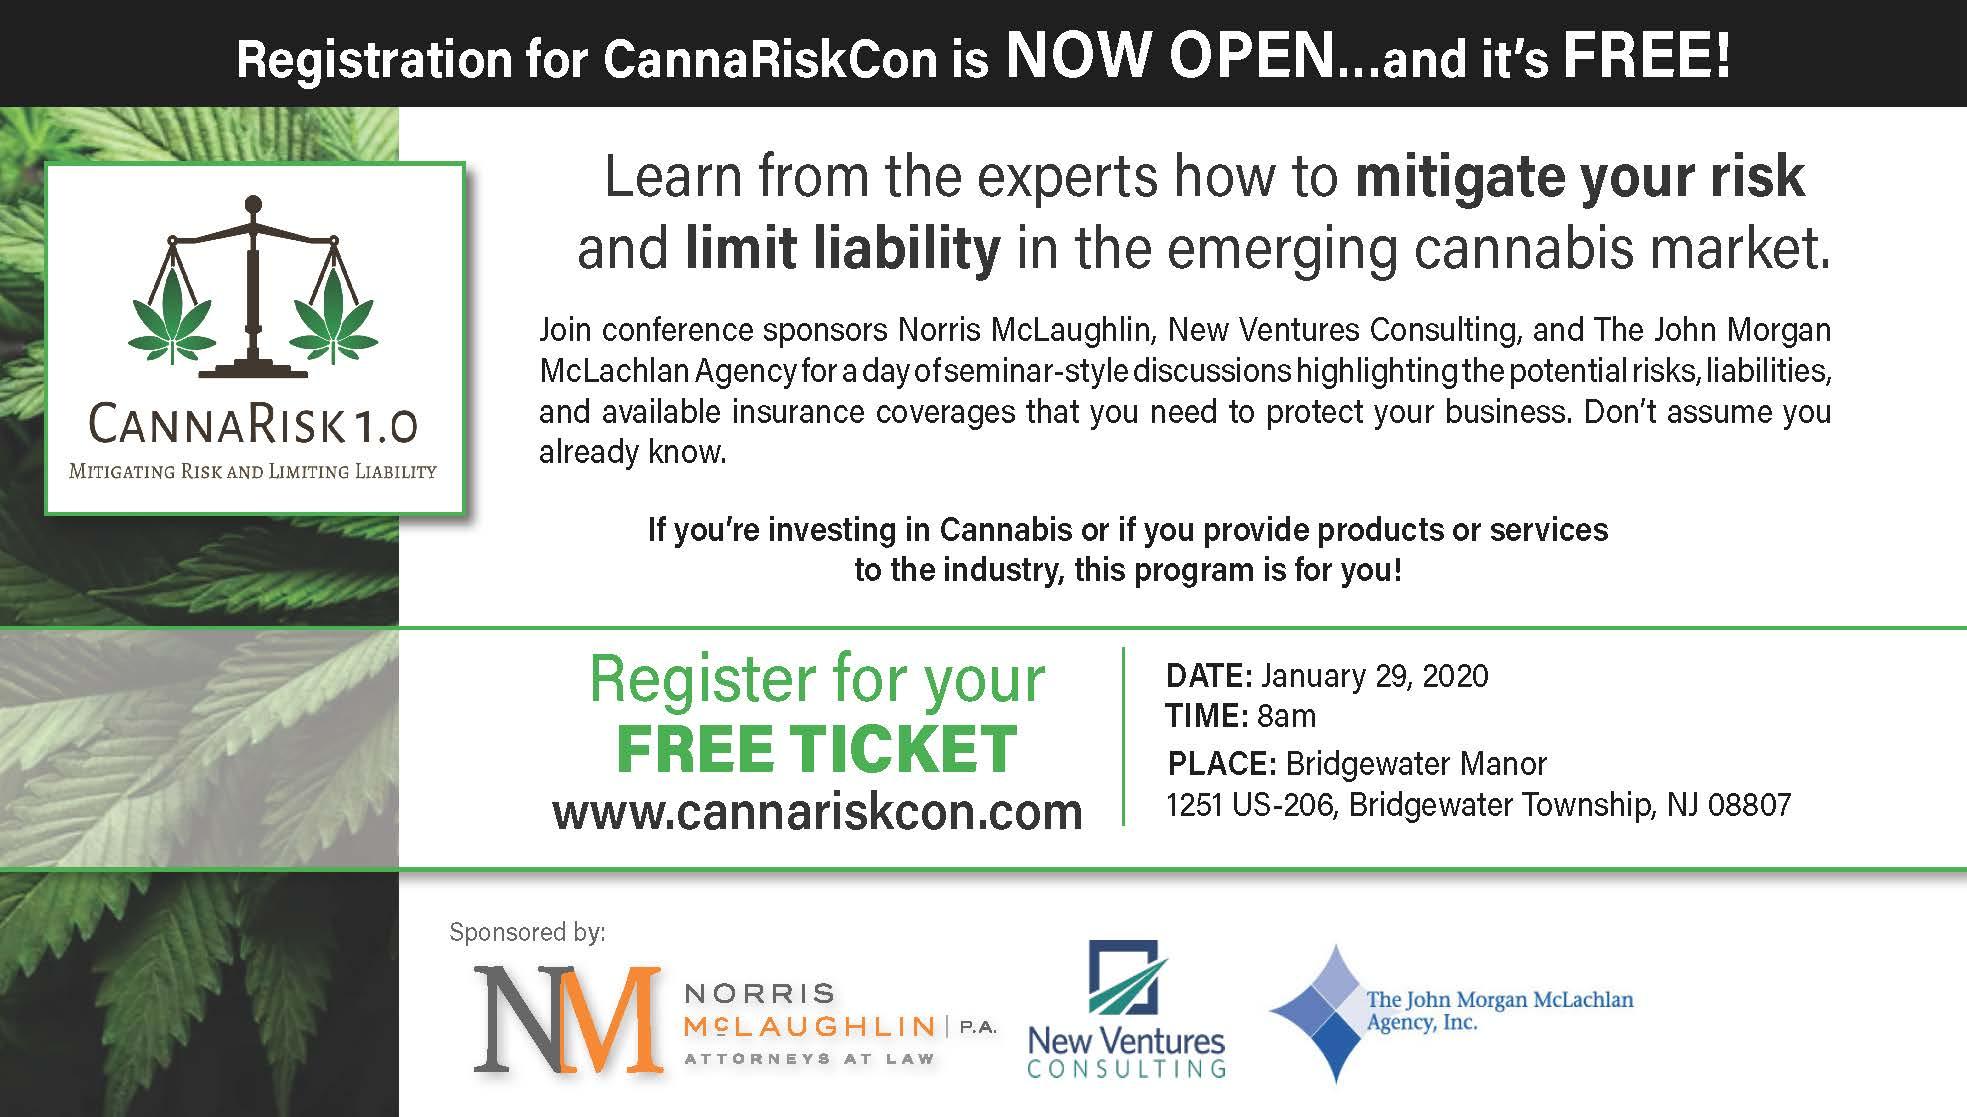 CannaRiskCon 1.0 - Mitigating Risk and Limiting Liability